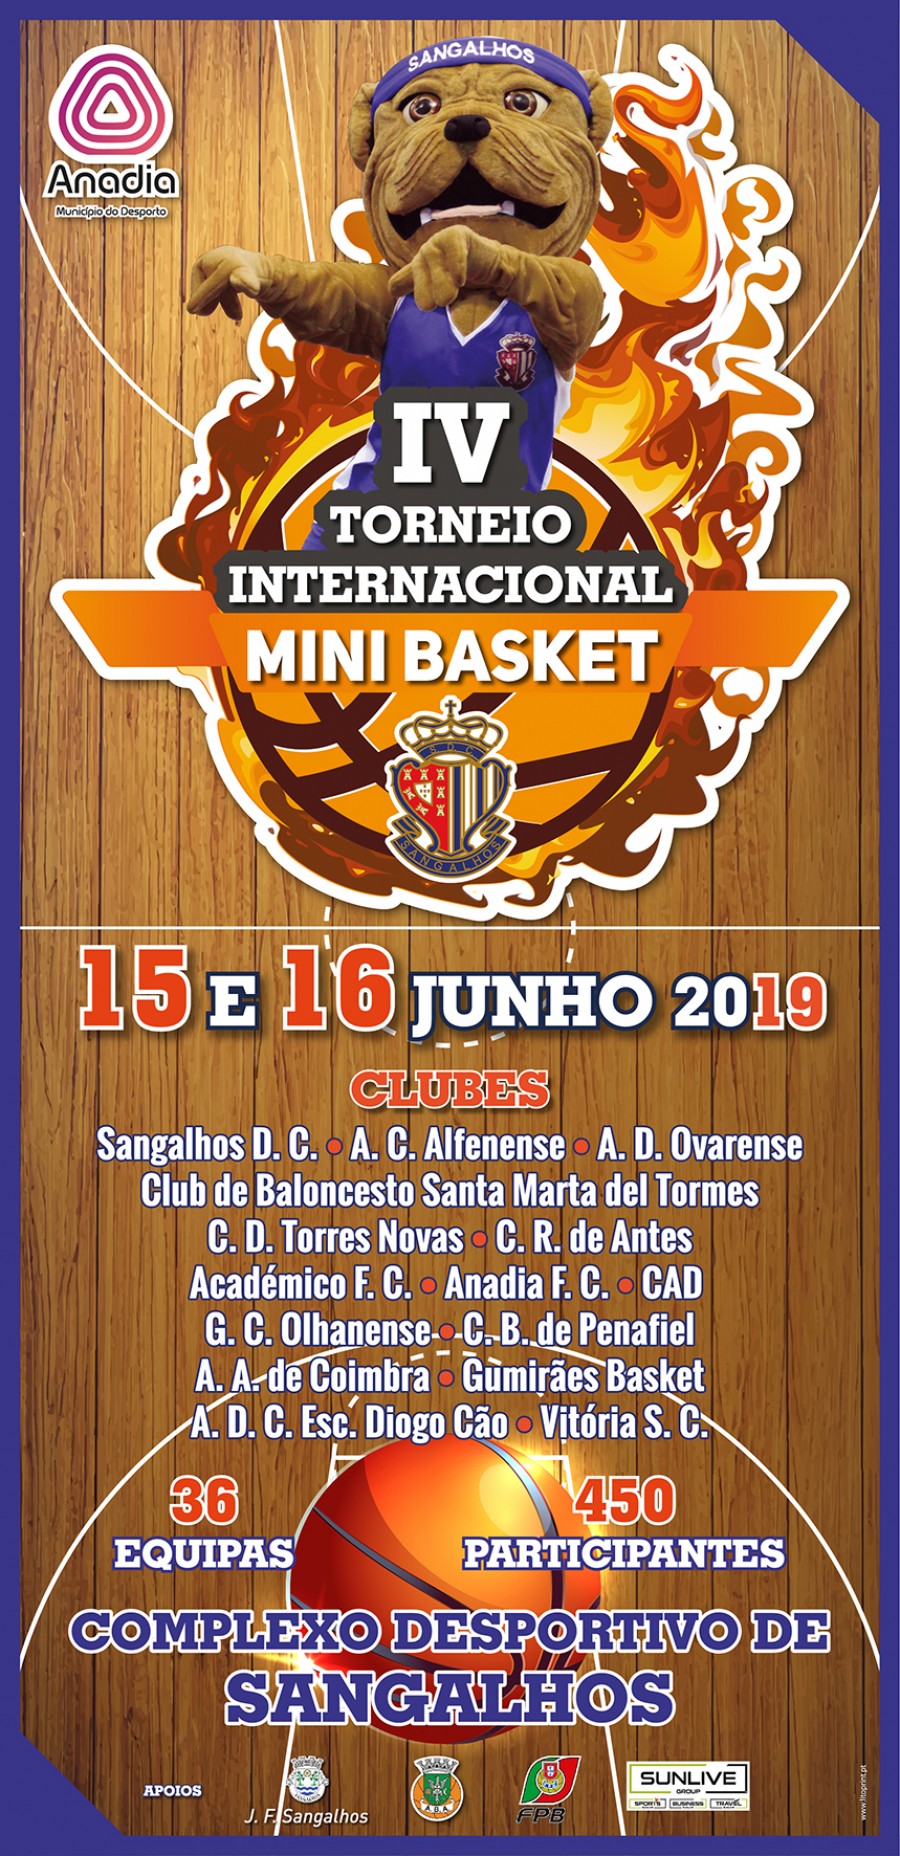 IV Torneio Internacional de Mini Basket